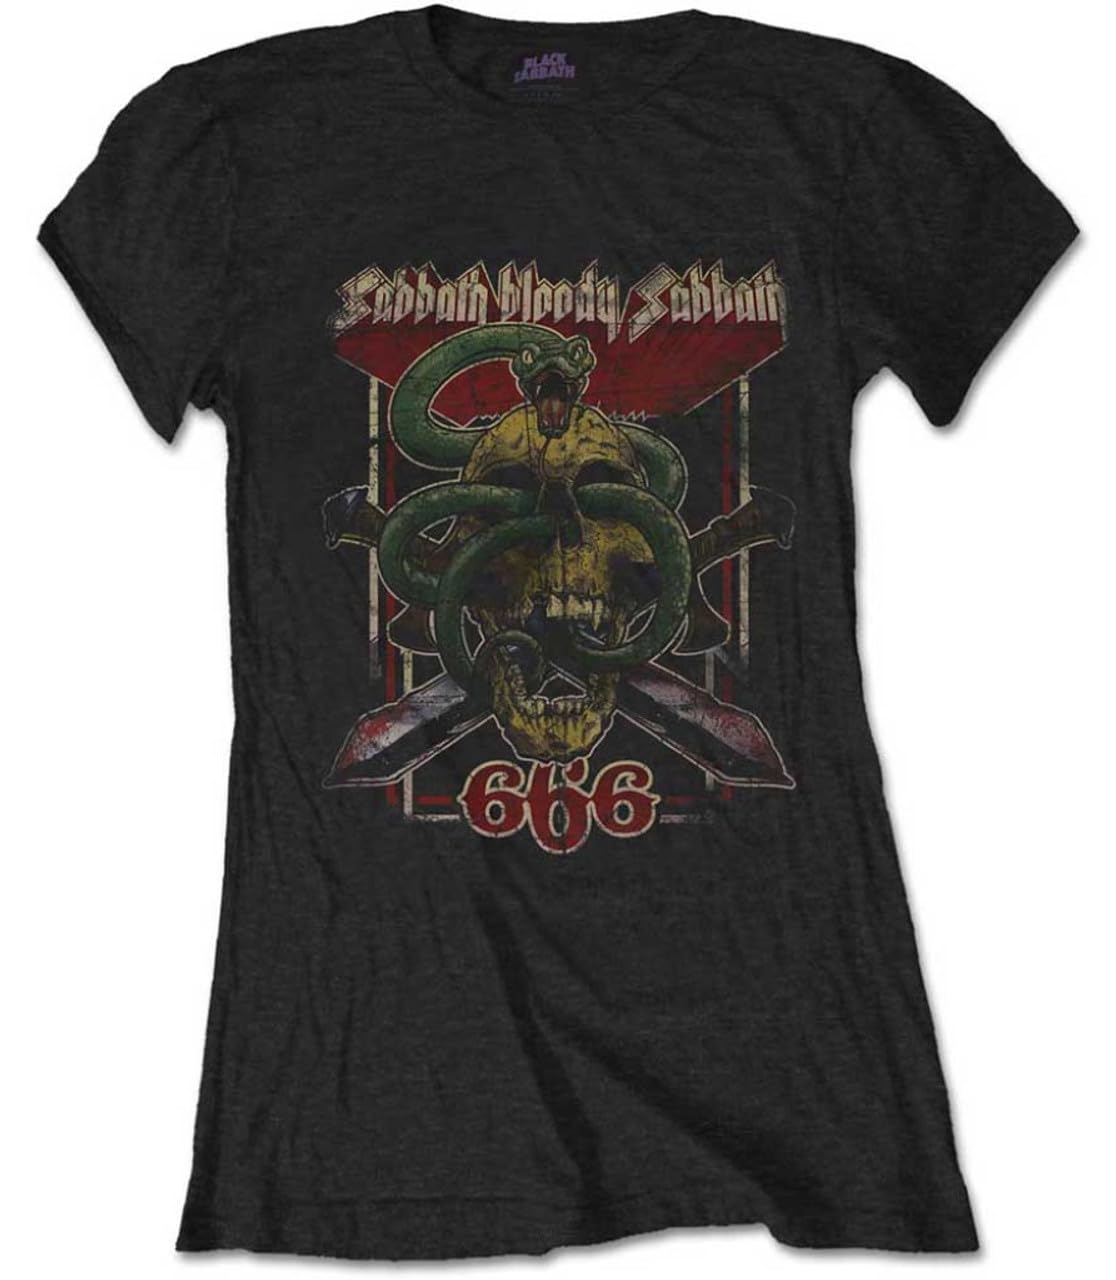 Black Sabbath 'Bloody Sabbath 666' (Black) Womens Fitted T-Shirt (small)